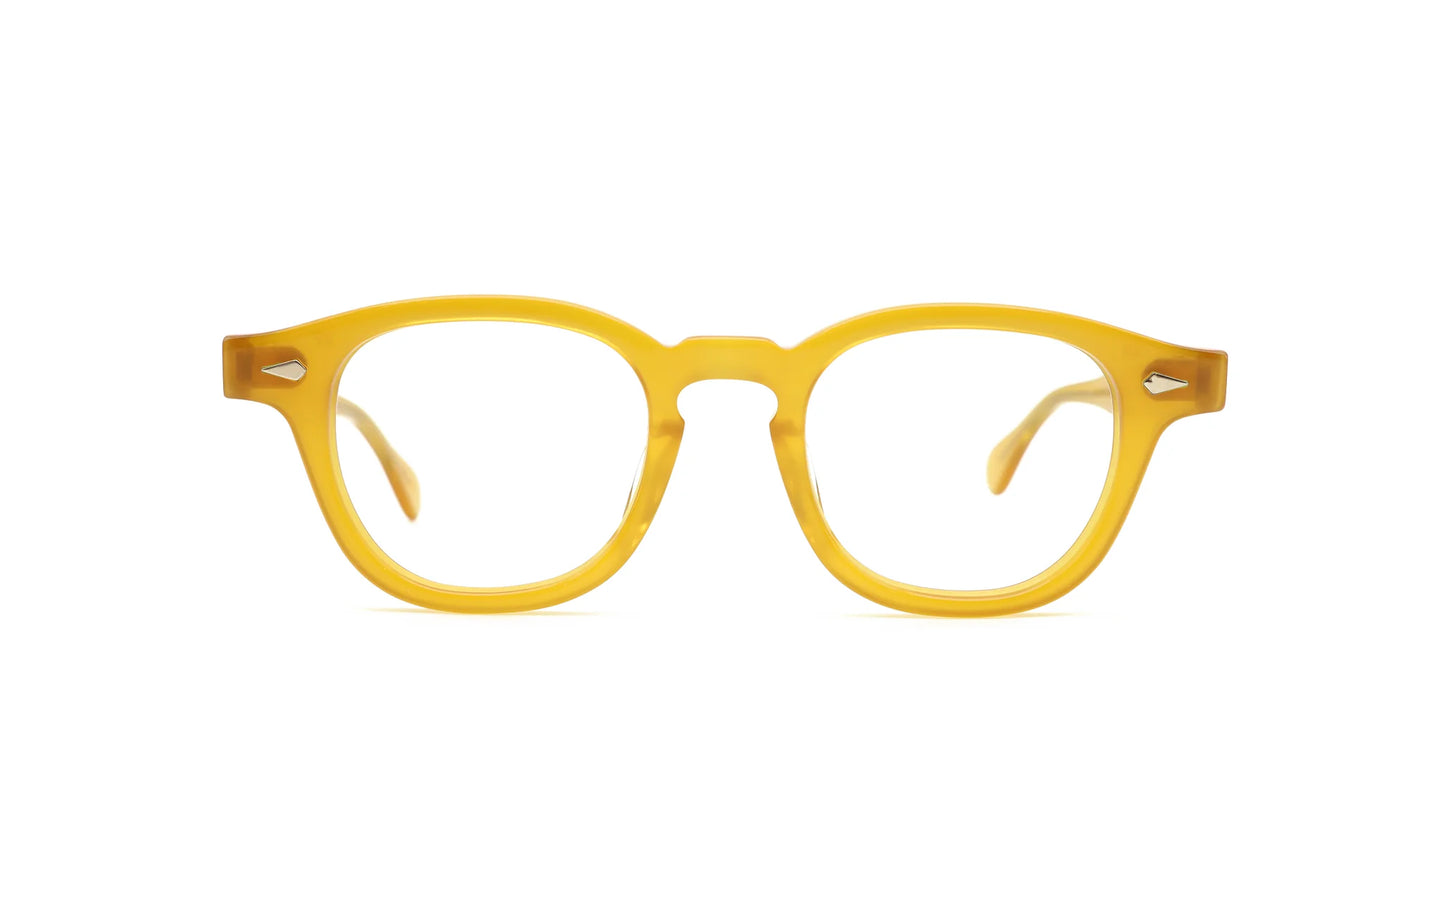 JULIUS TART OPTICAL AR Eyeglass Frame Vintage Yellow